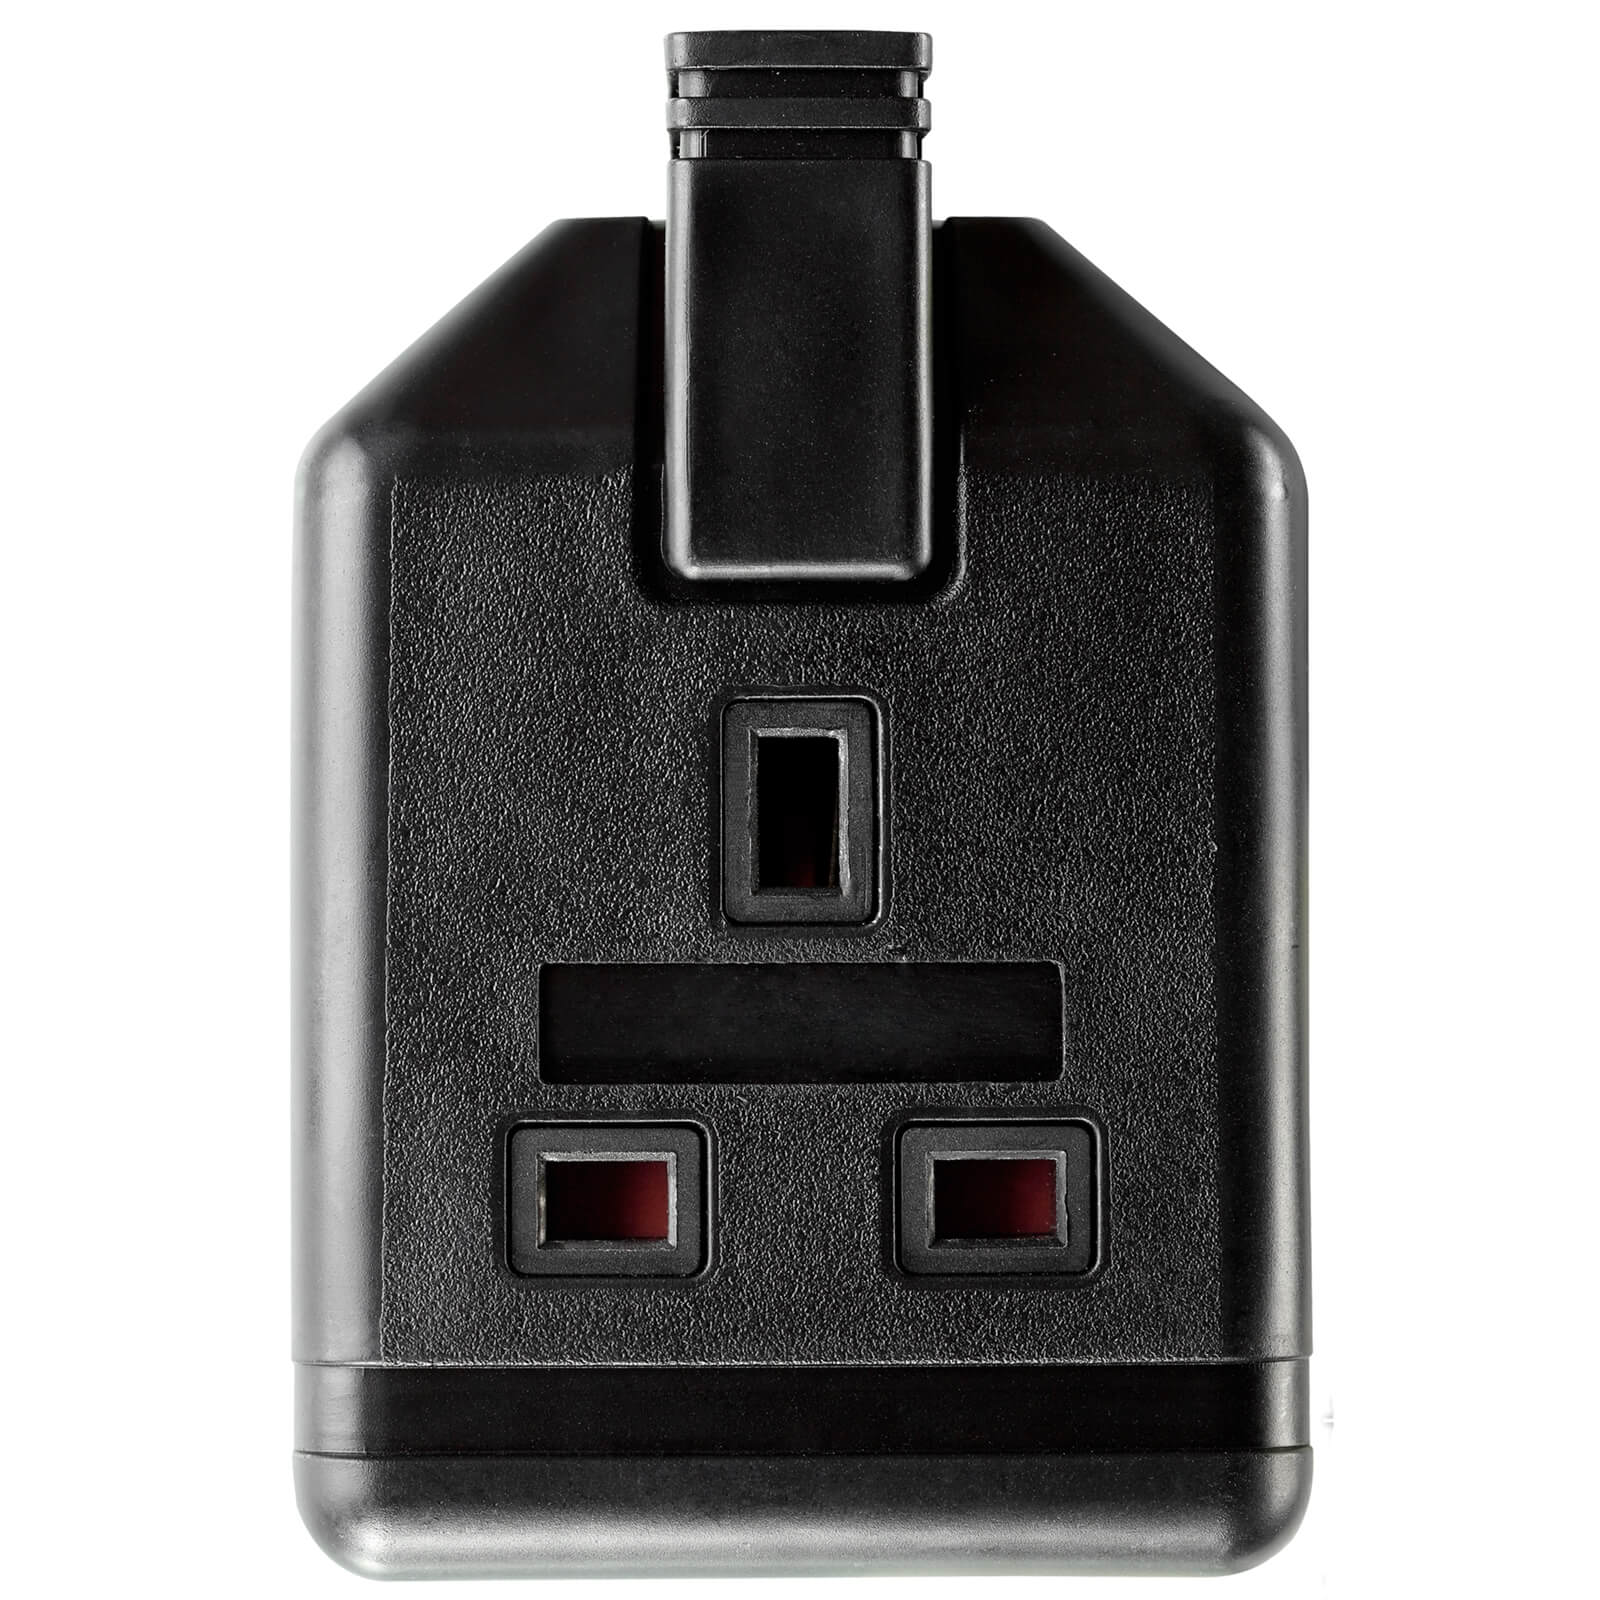 Masterplug 1 Socket Heavy Duty Rewirable Trailing Socket Black